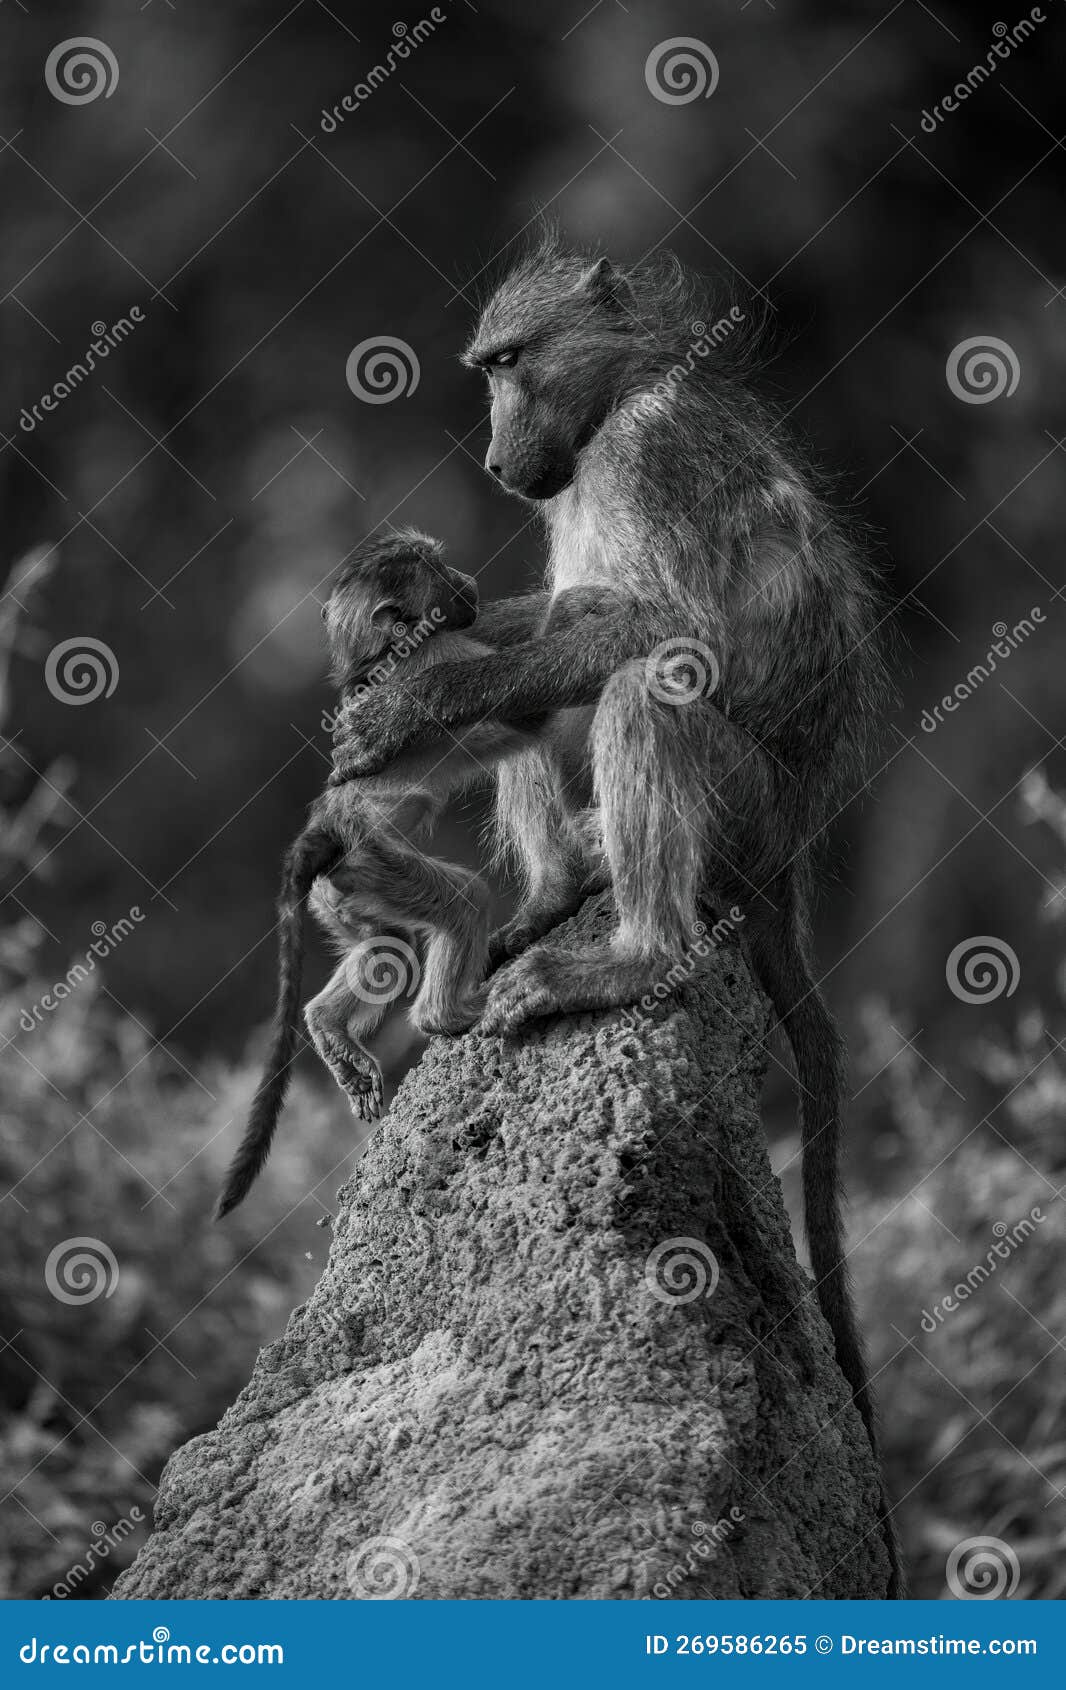 mono chacma baboon joins mother on mound